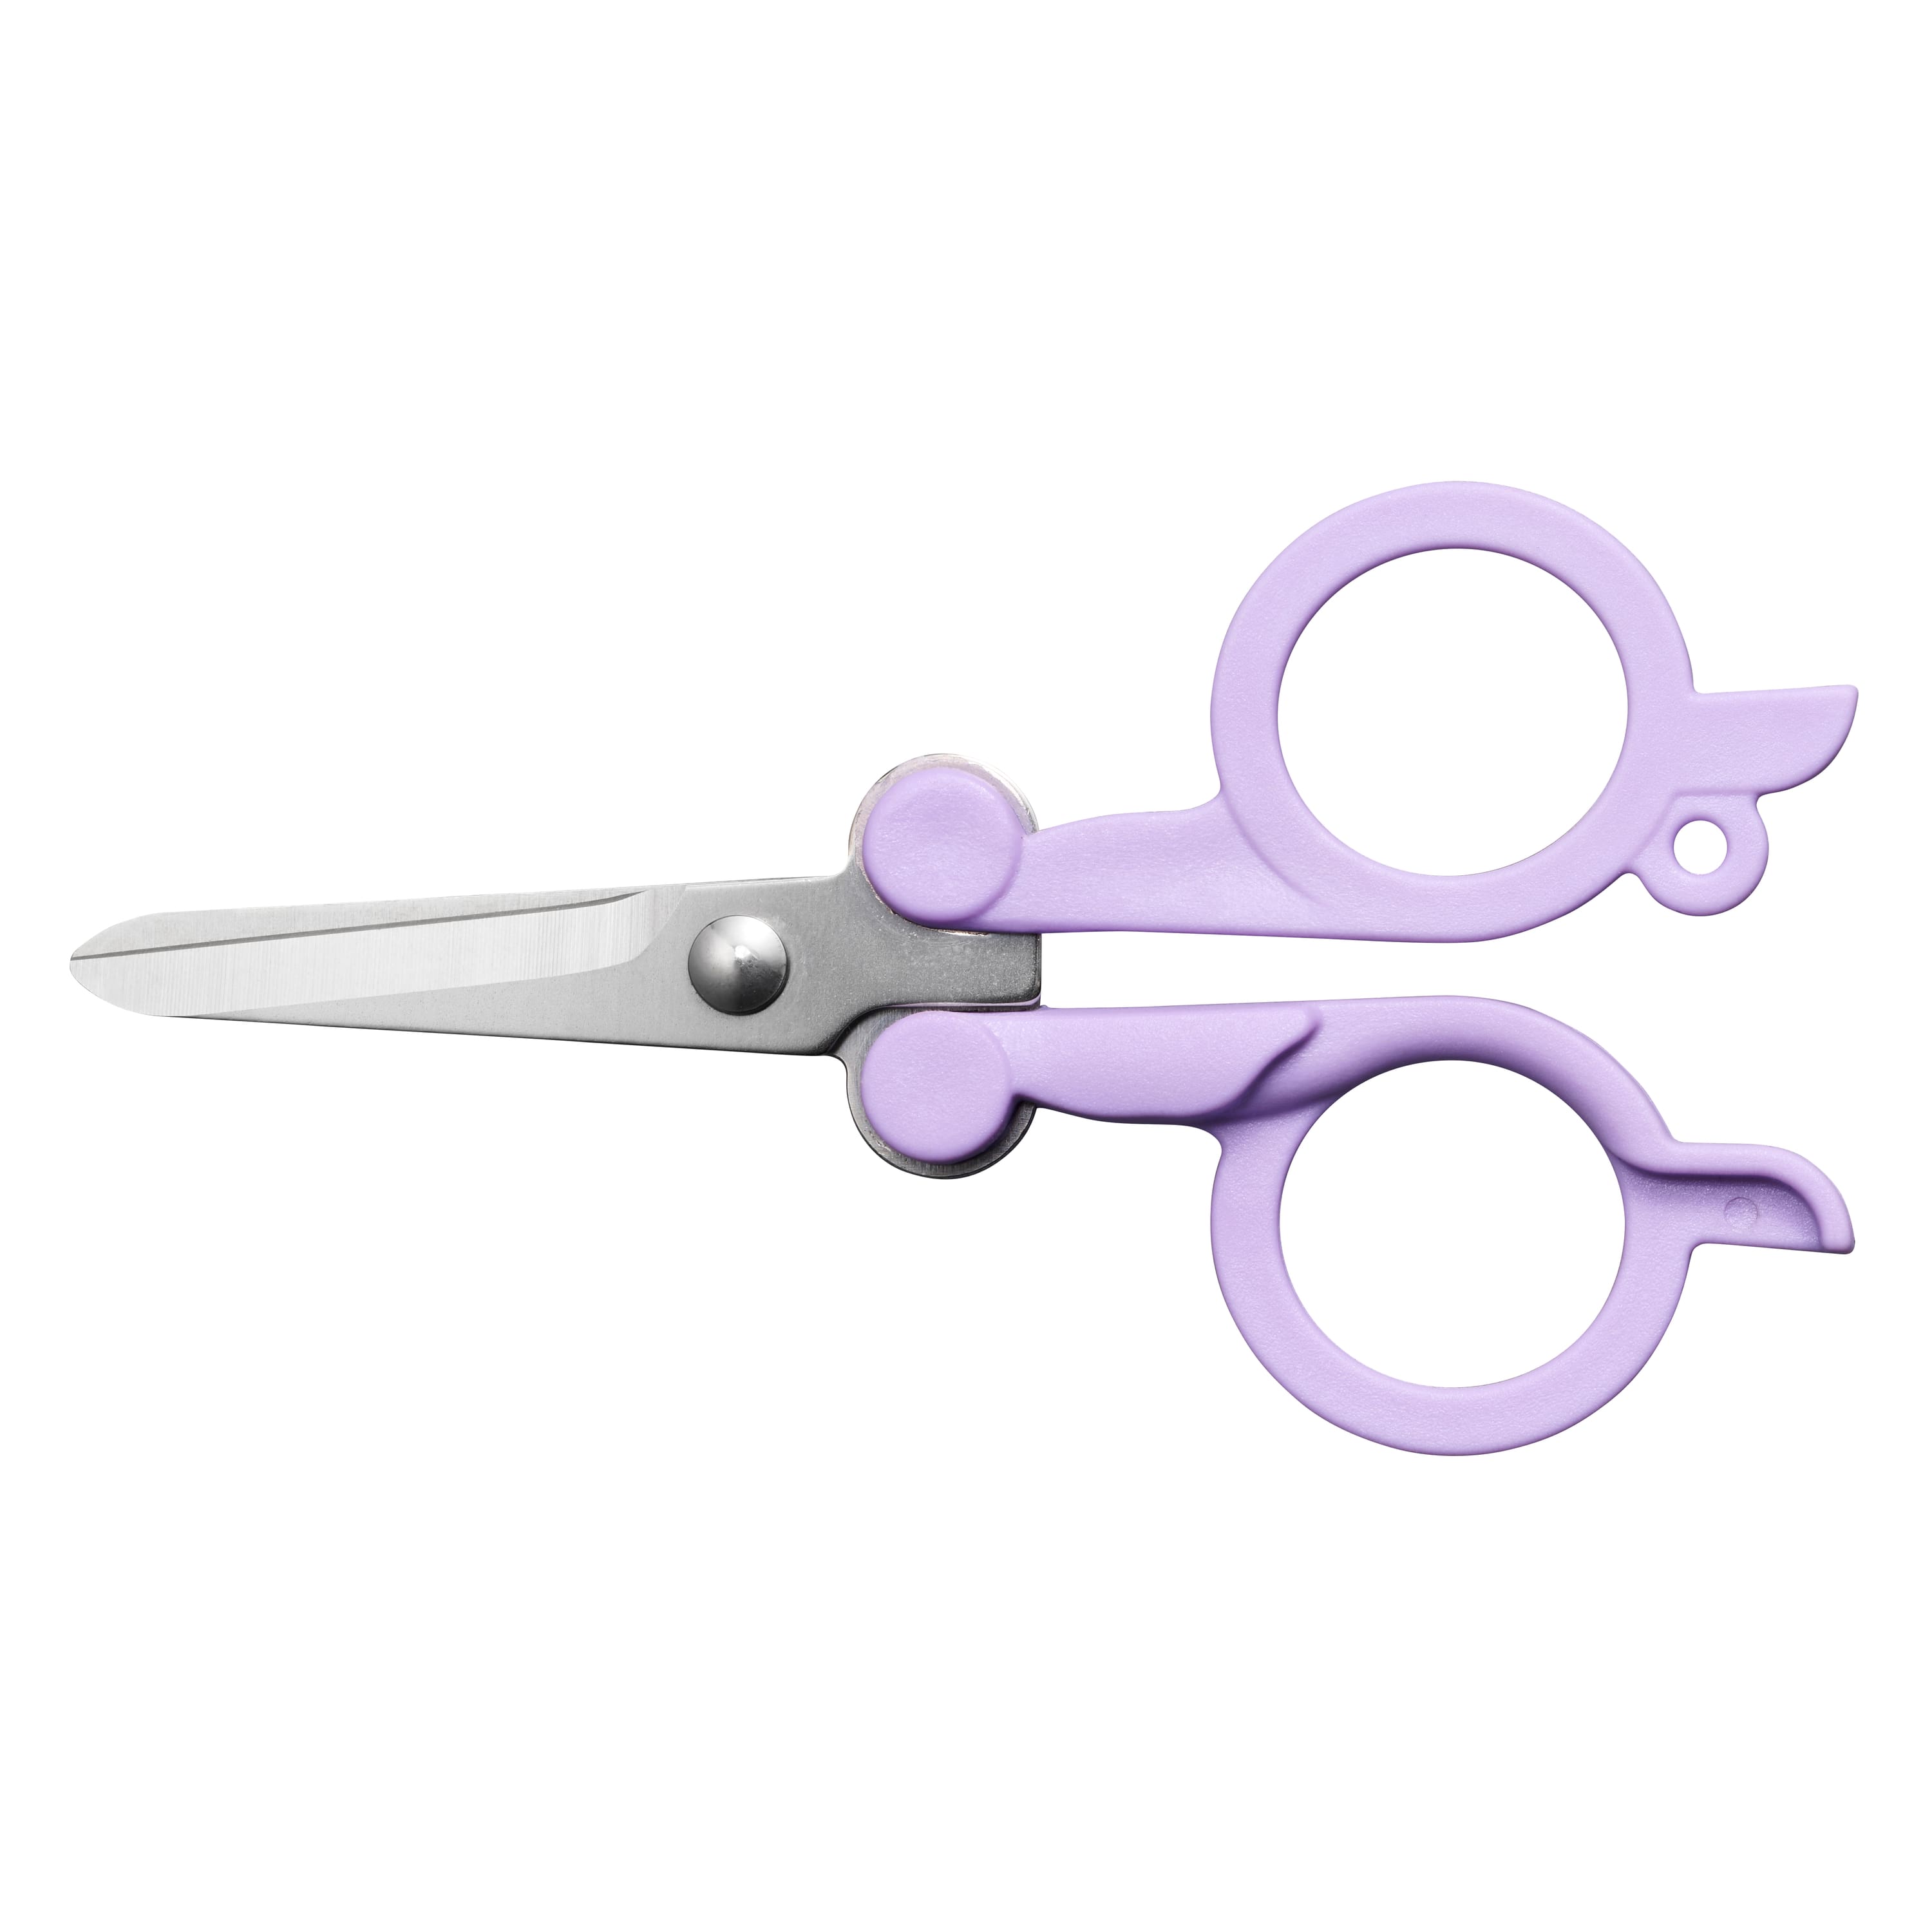 The Good Scissors - Lilac